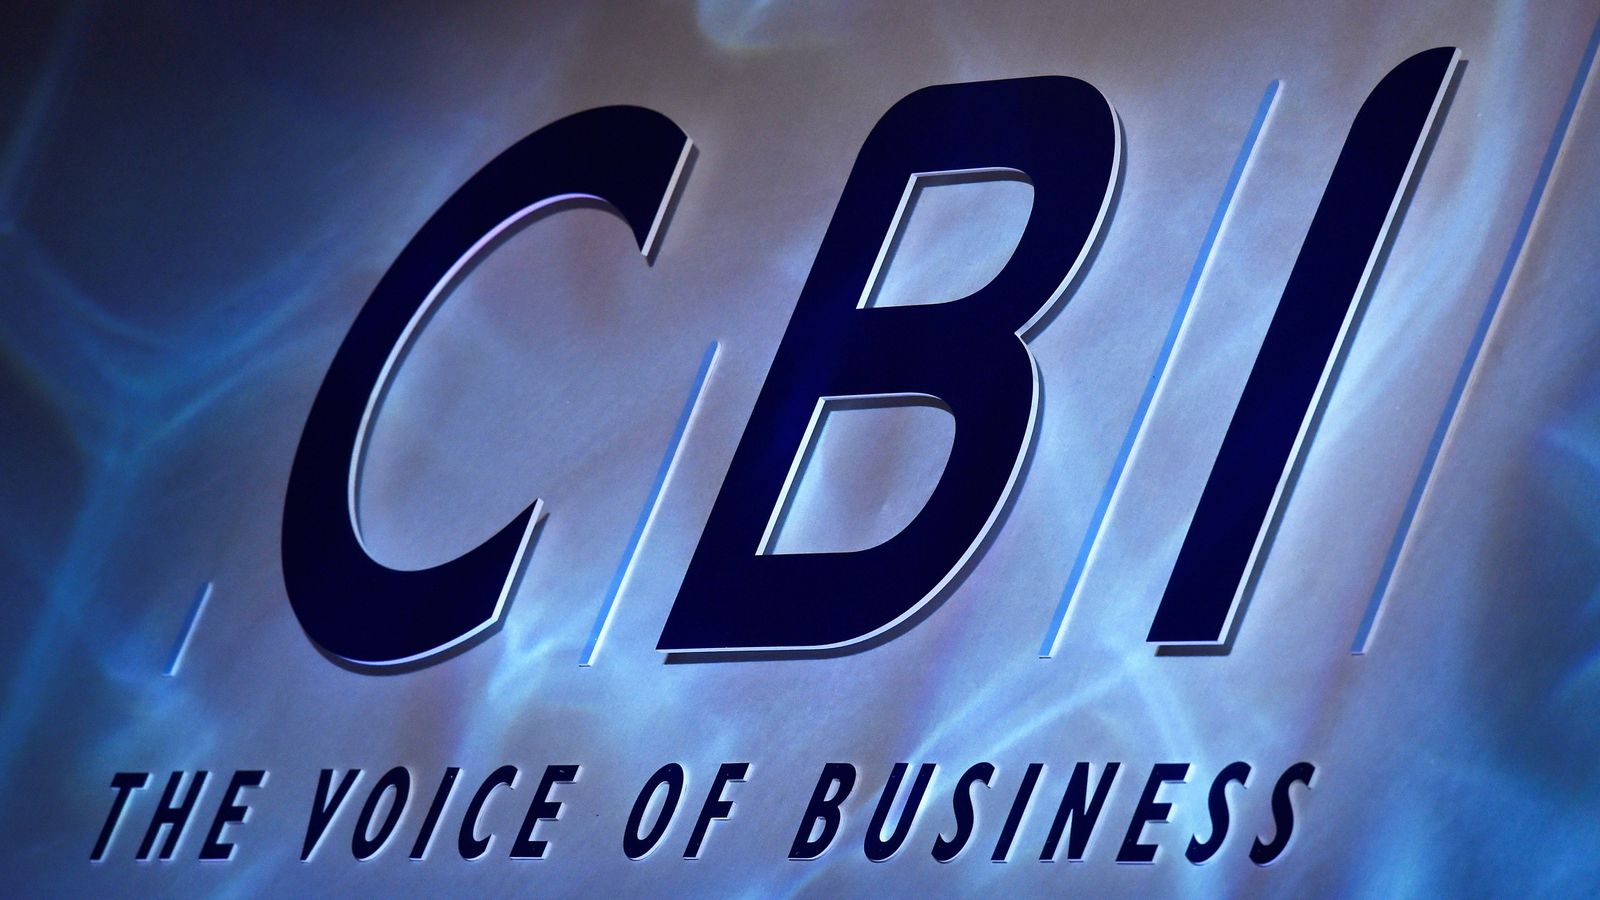 Members of scandal hit-CBI begin confidence vote on lobby group's future 